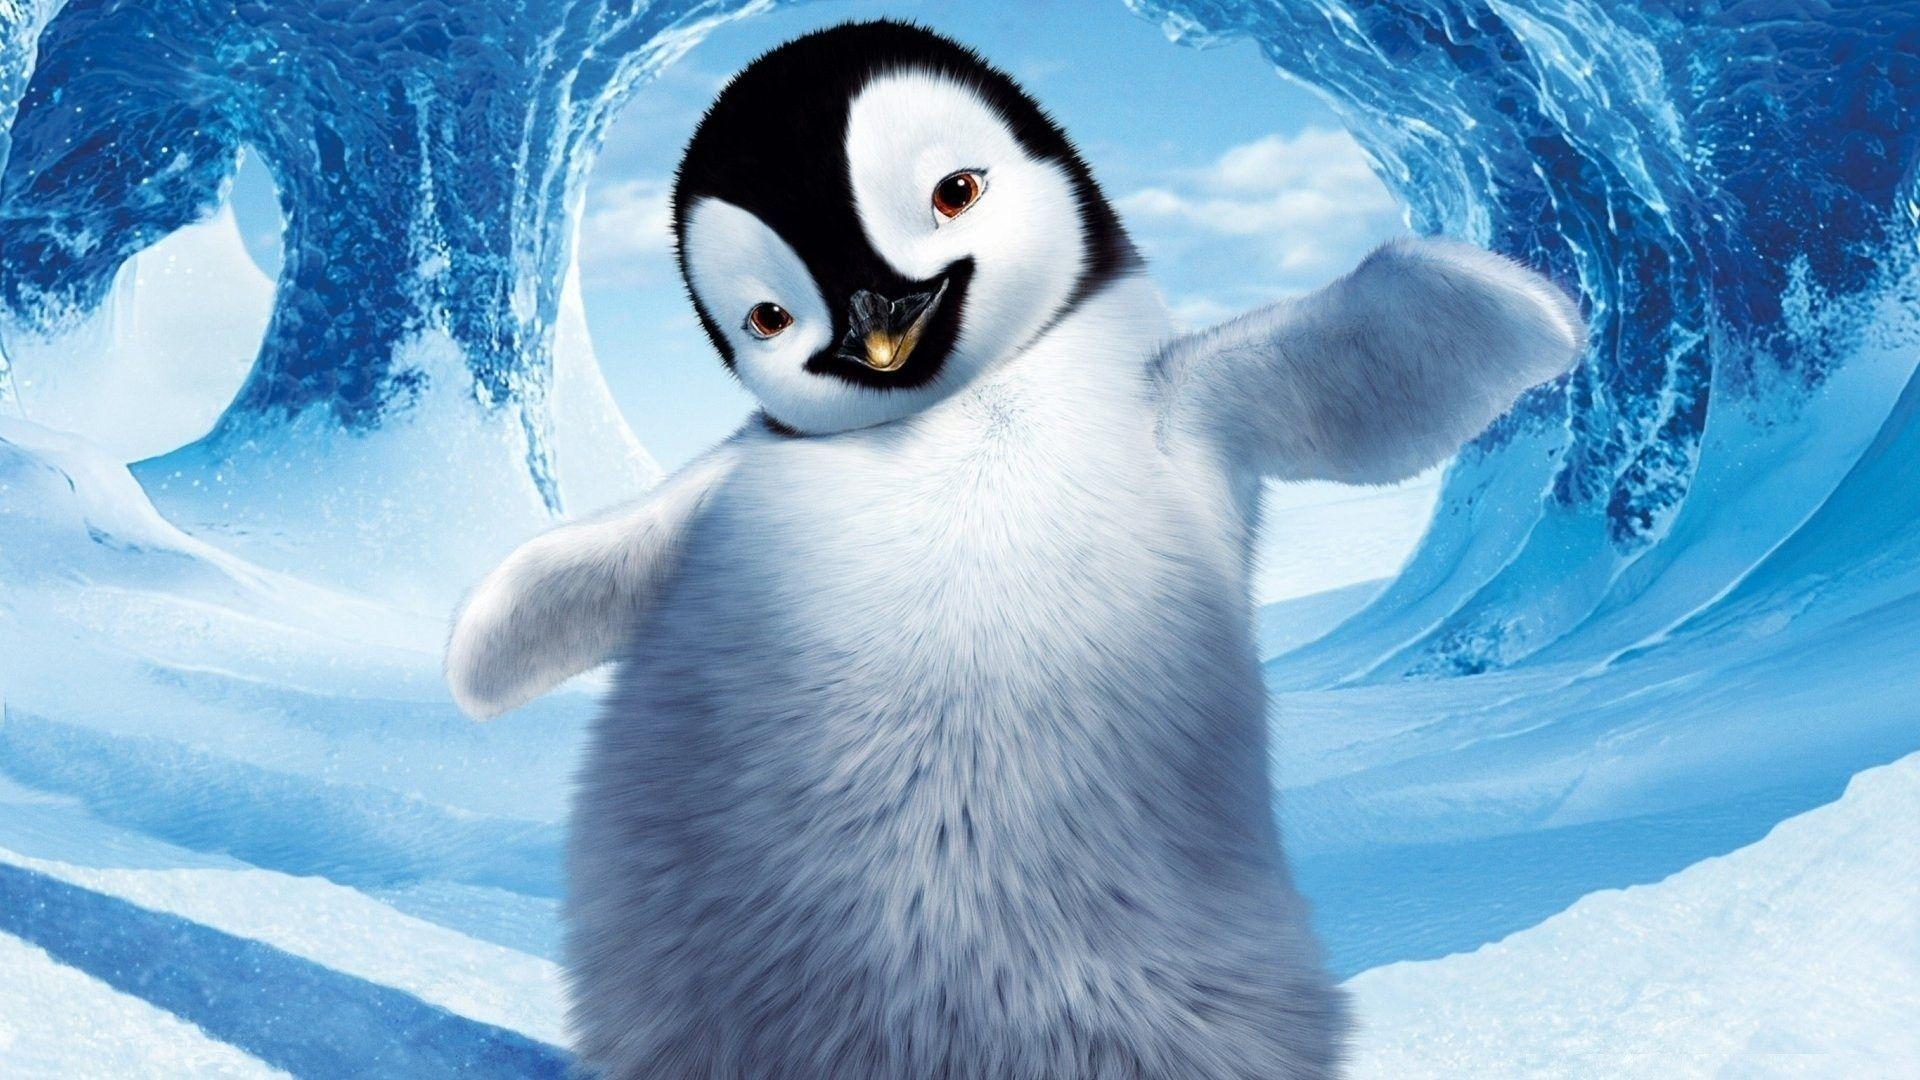 Cute Penguin Desktop Wallpapers   Top Free Cute Penguin Desktop